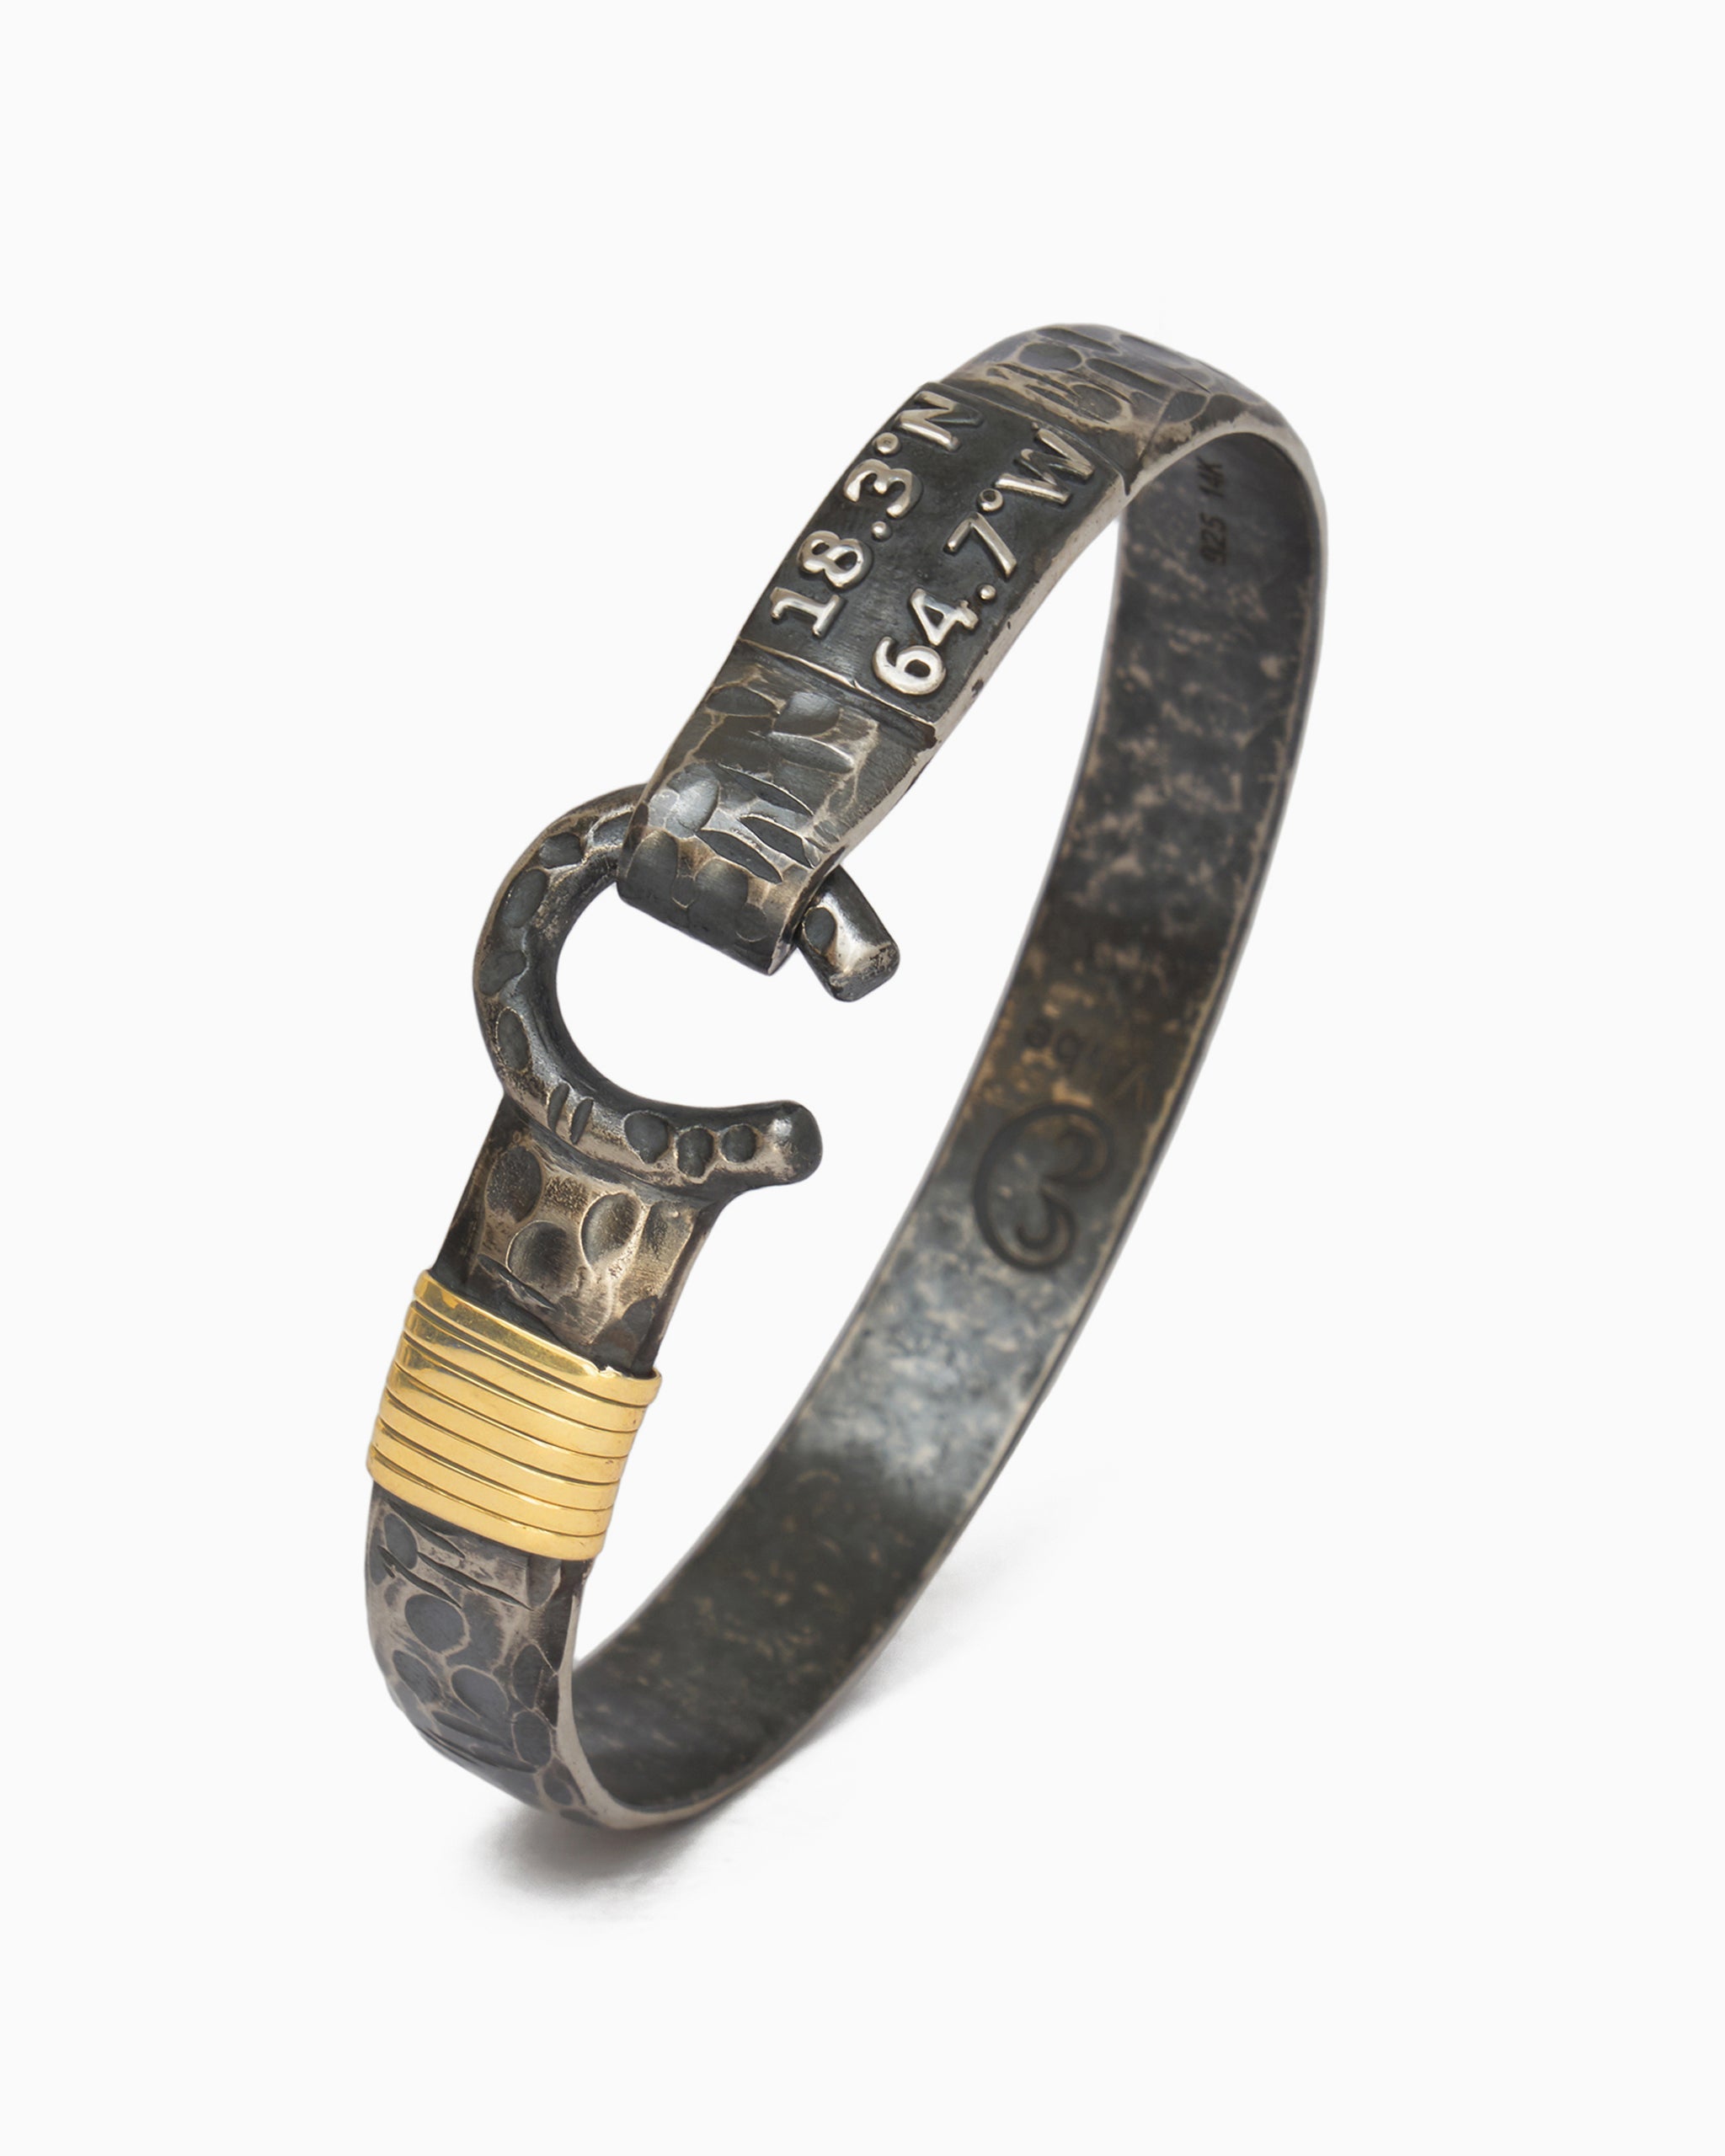 Pirate Texture Hook Bracelet with St. John Coordinates, 10mm